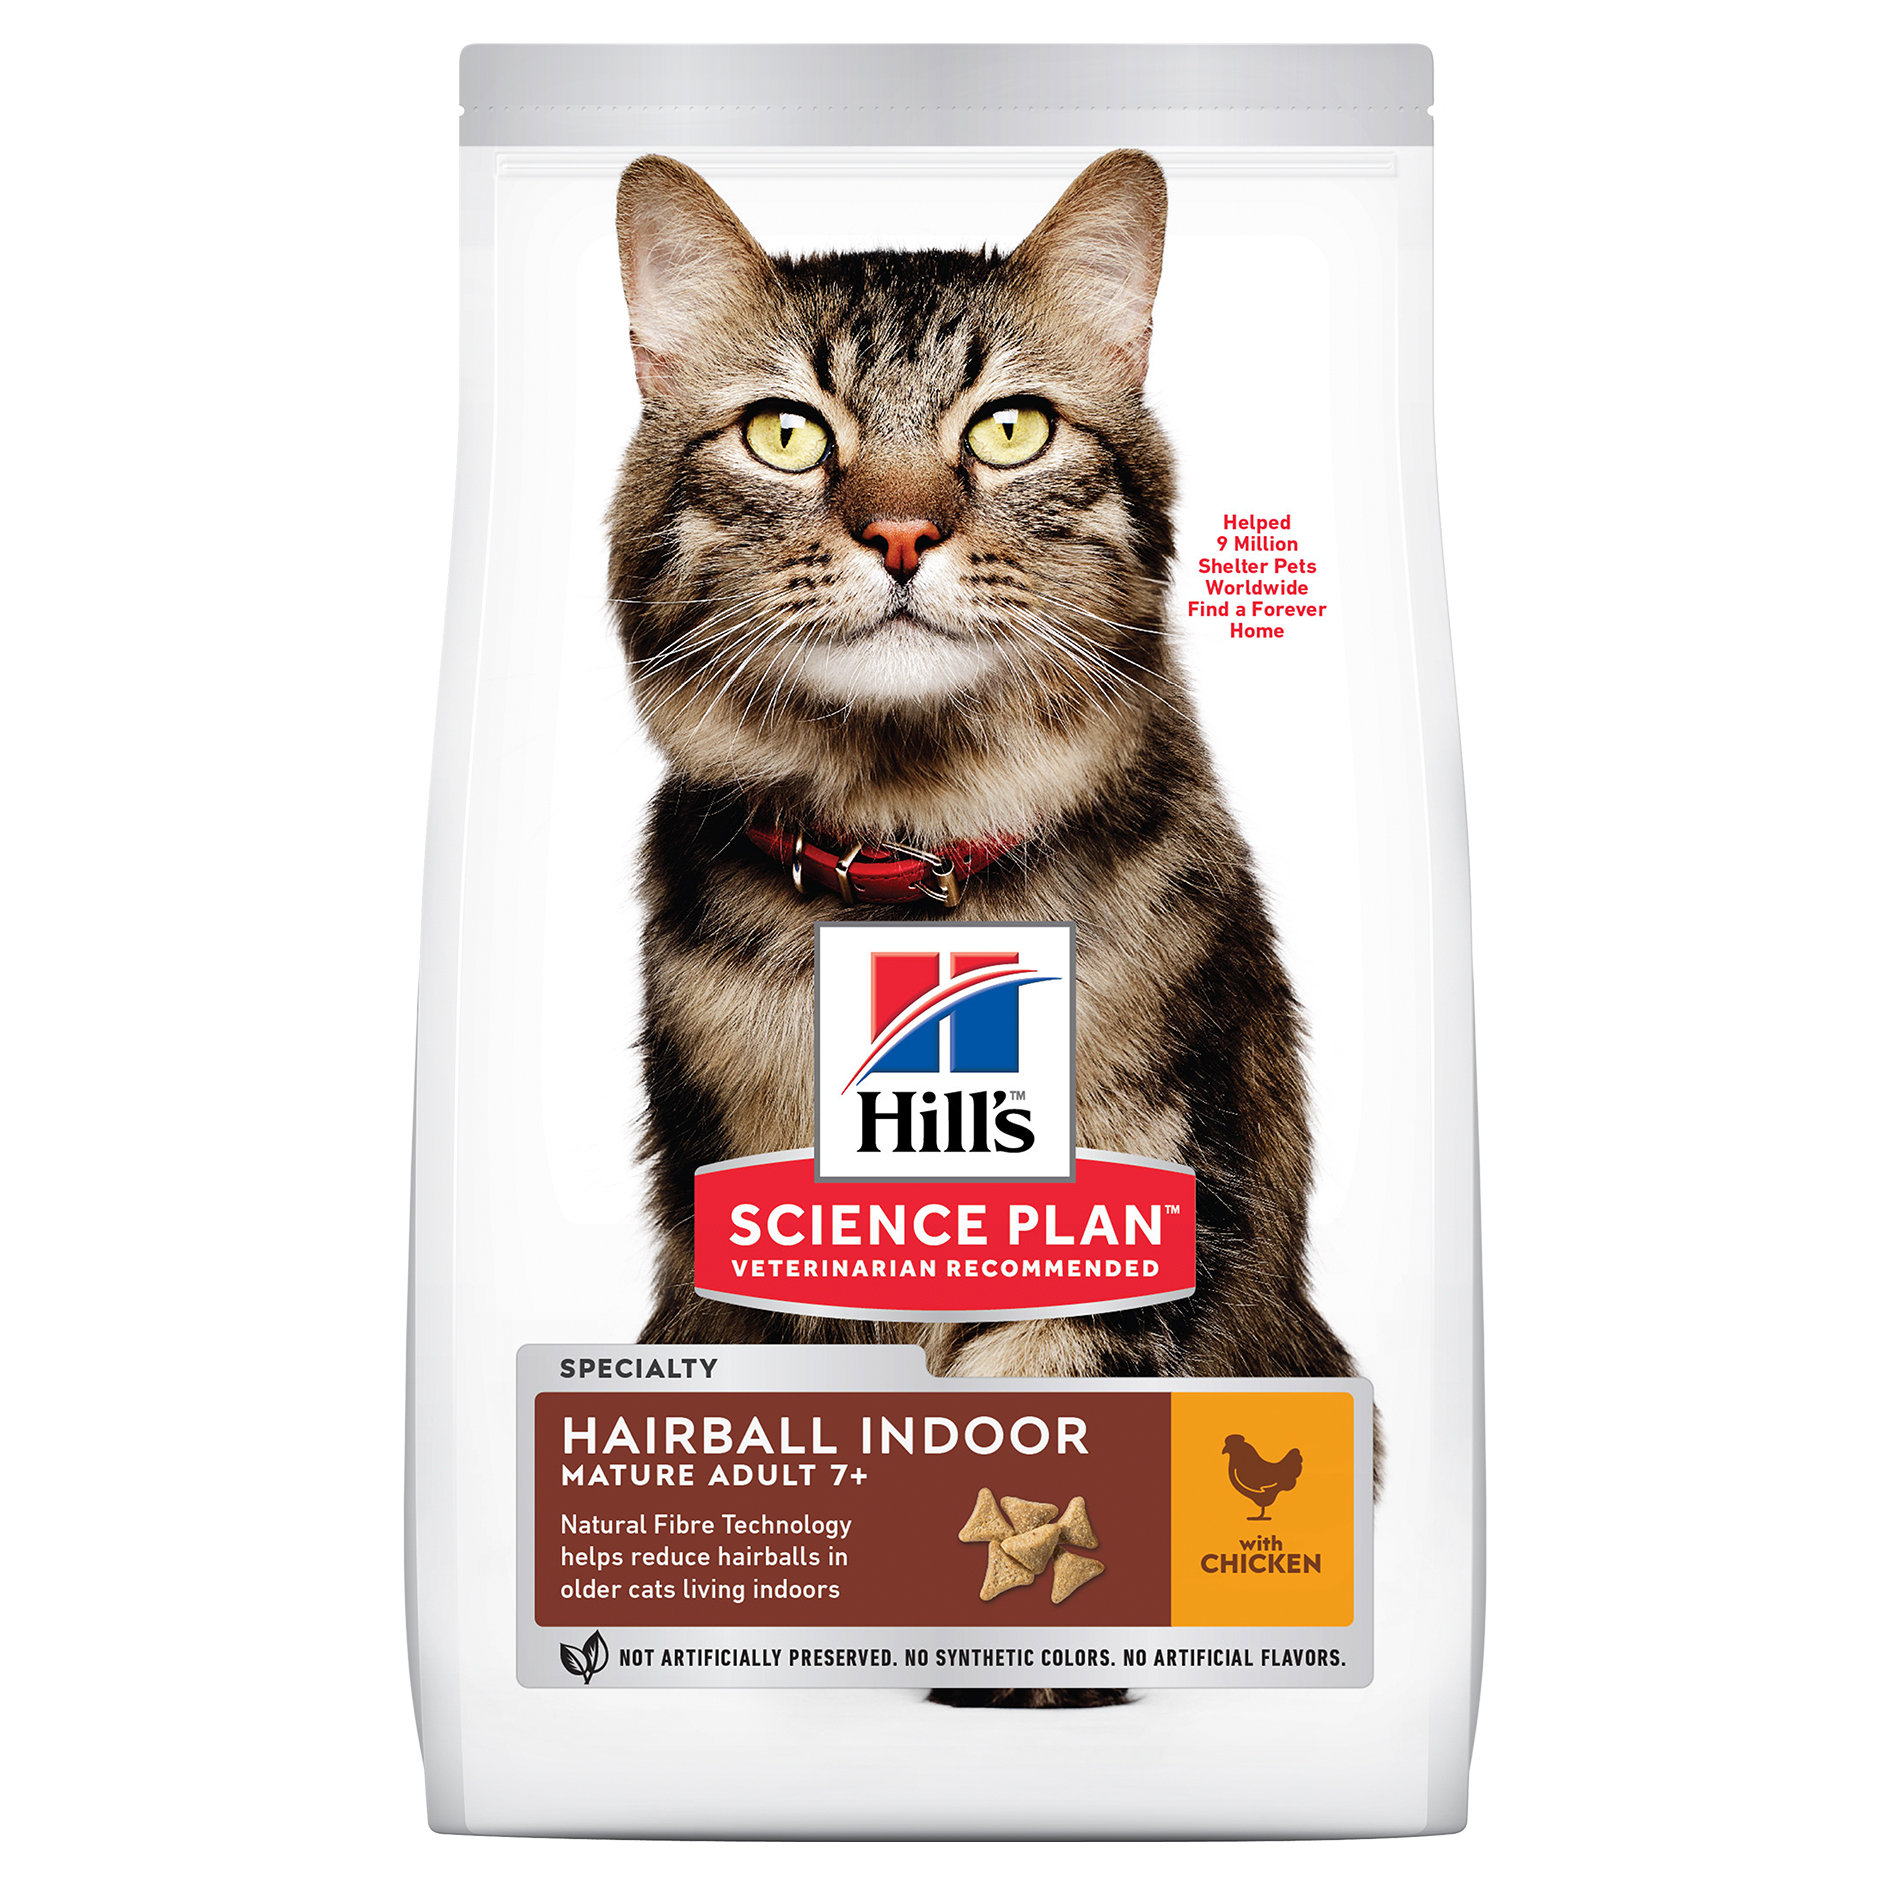 Hill's Science Plan לחתול מבוגר Hairball+Indoor +7 (עוף), 1.5 ק"ג